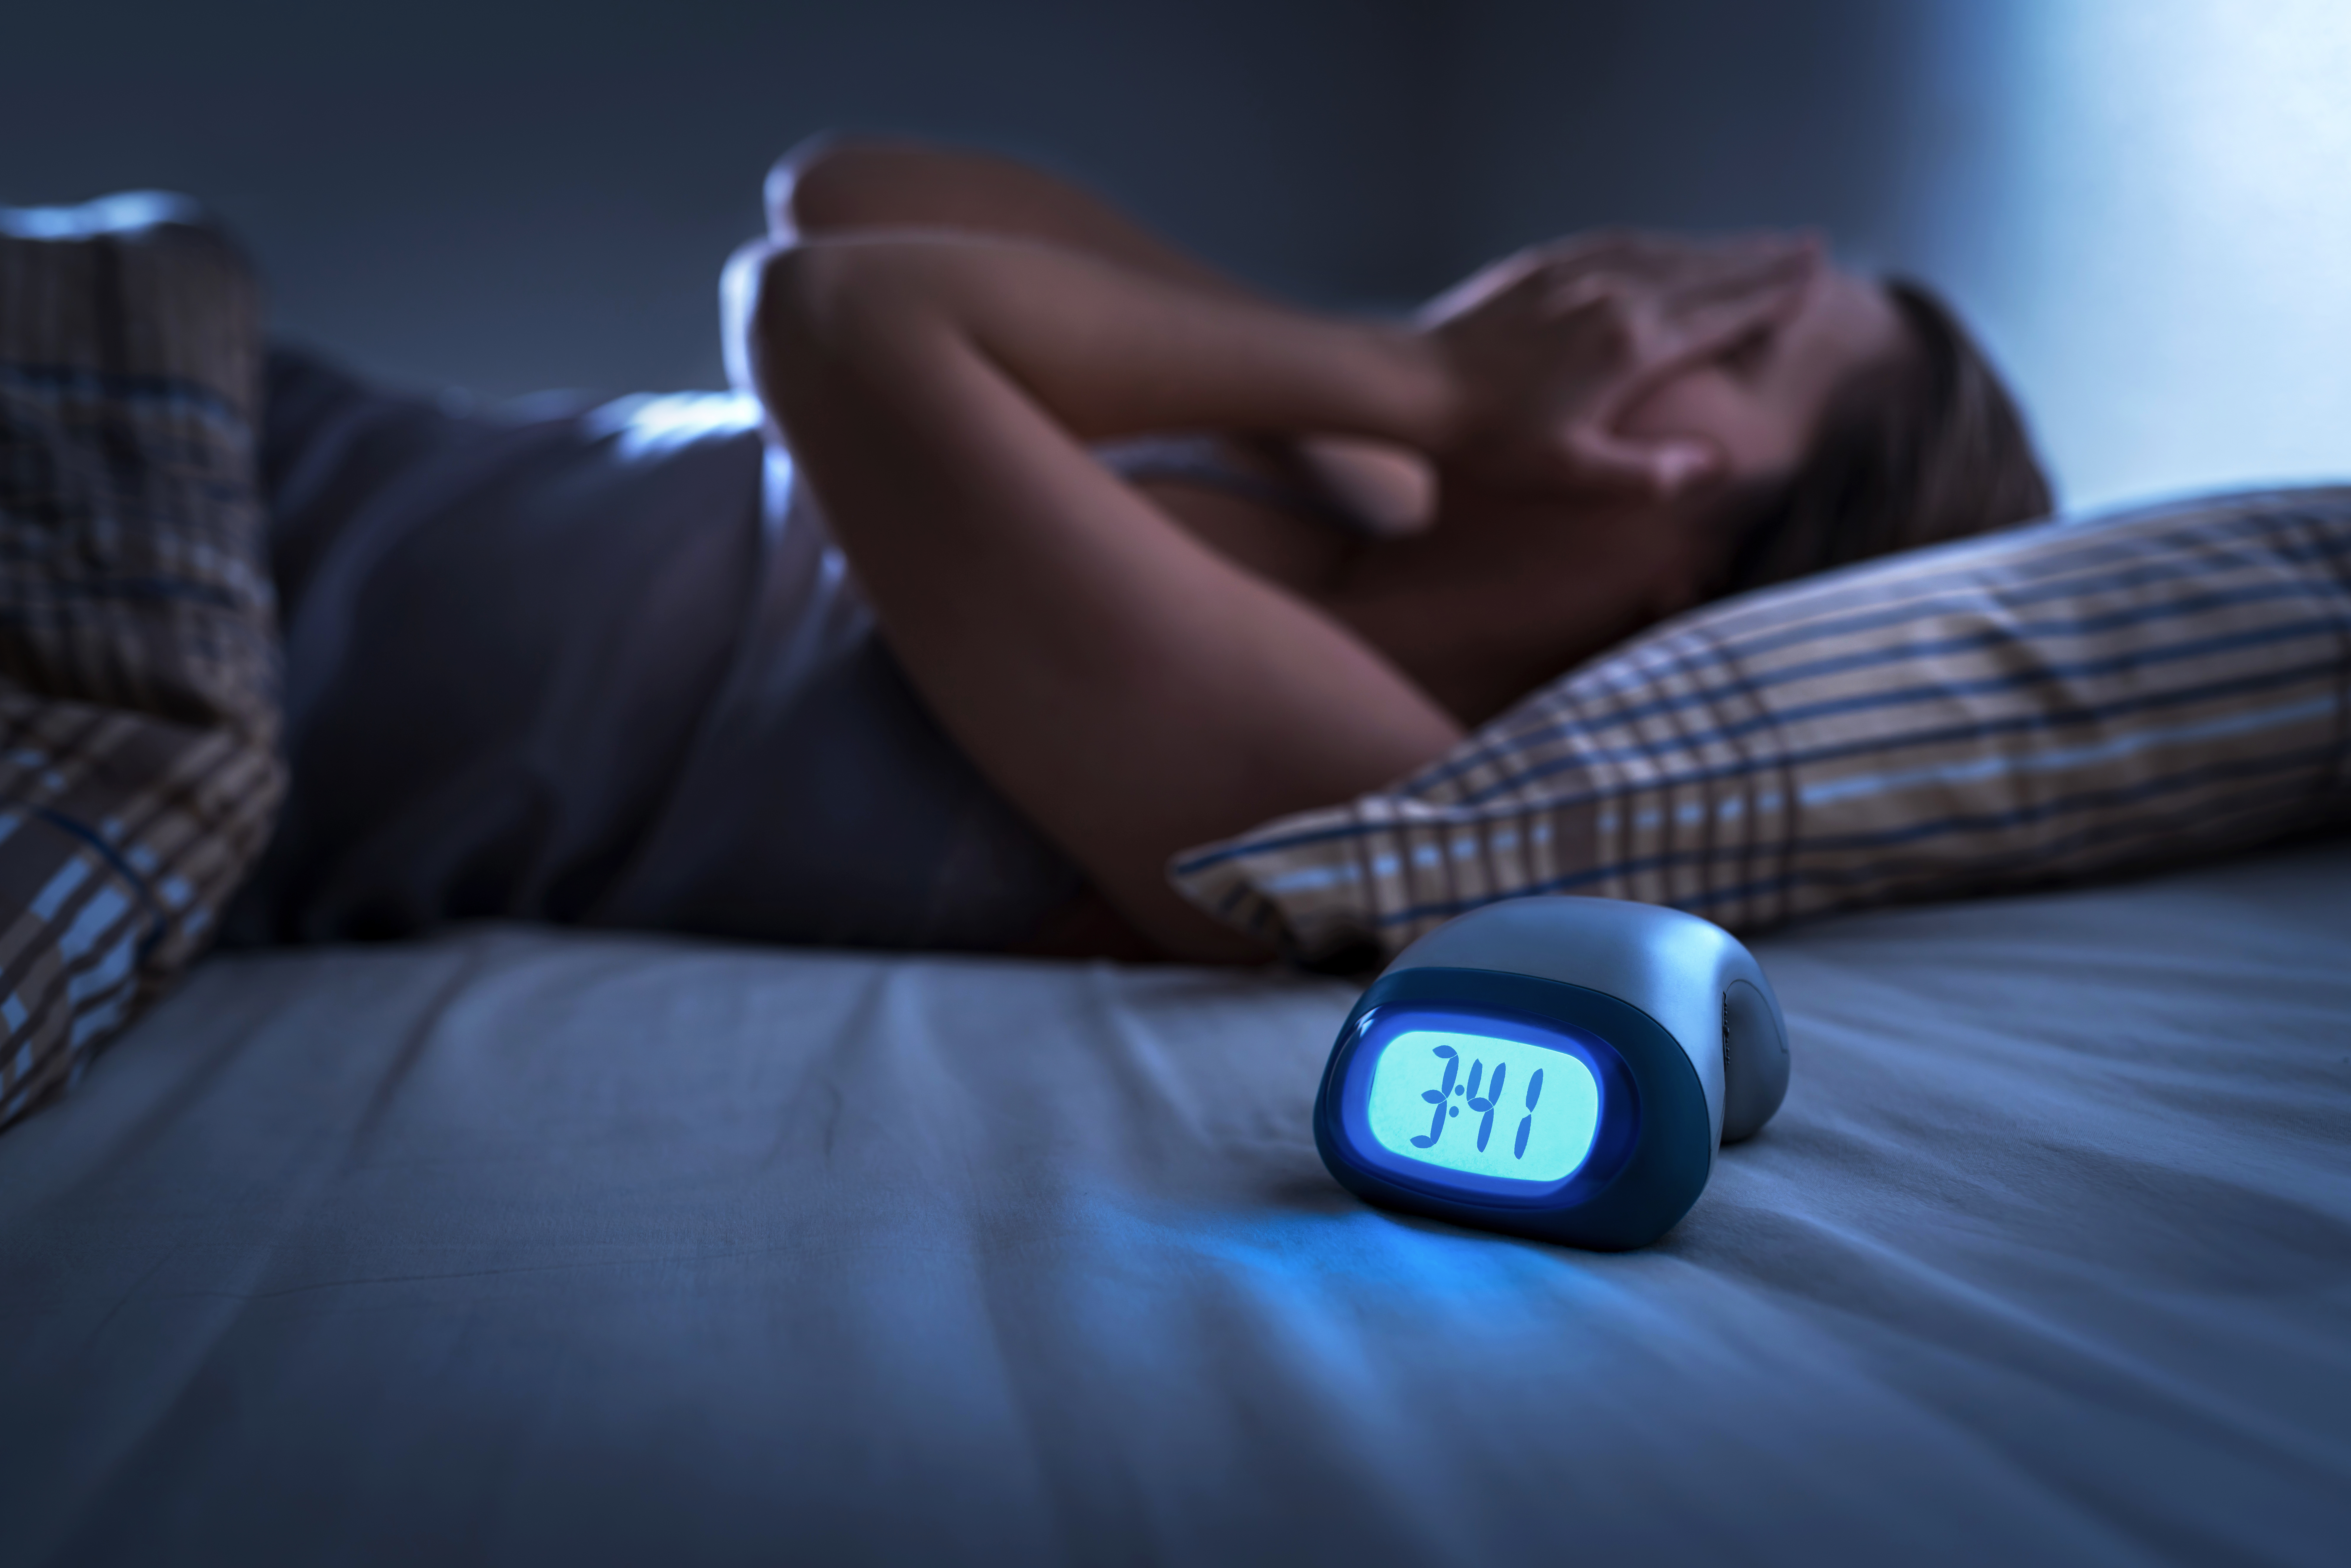 Sleepless woman suffering from insomnia. | Source: Shutterstock